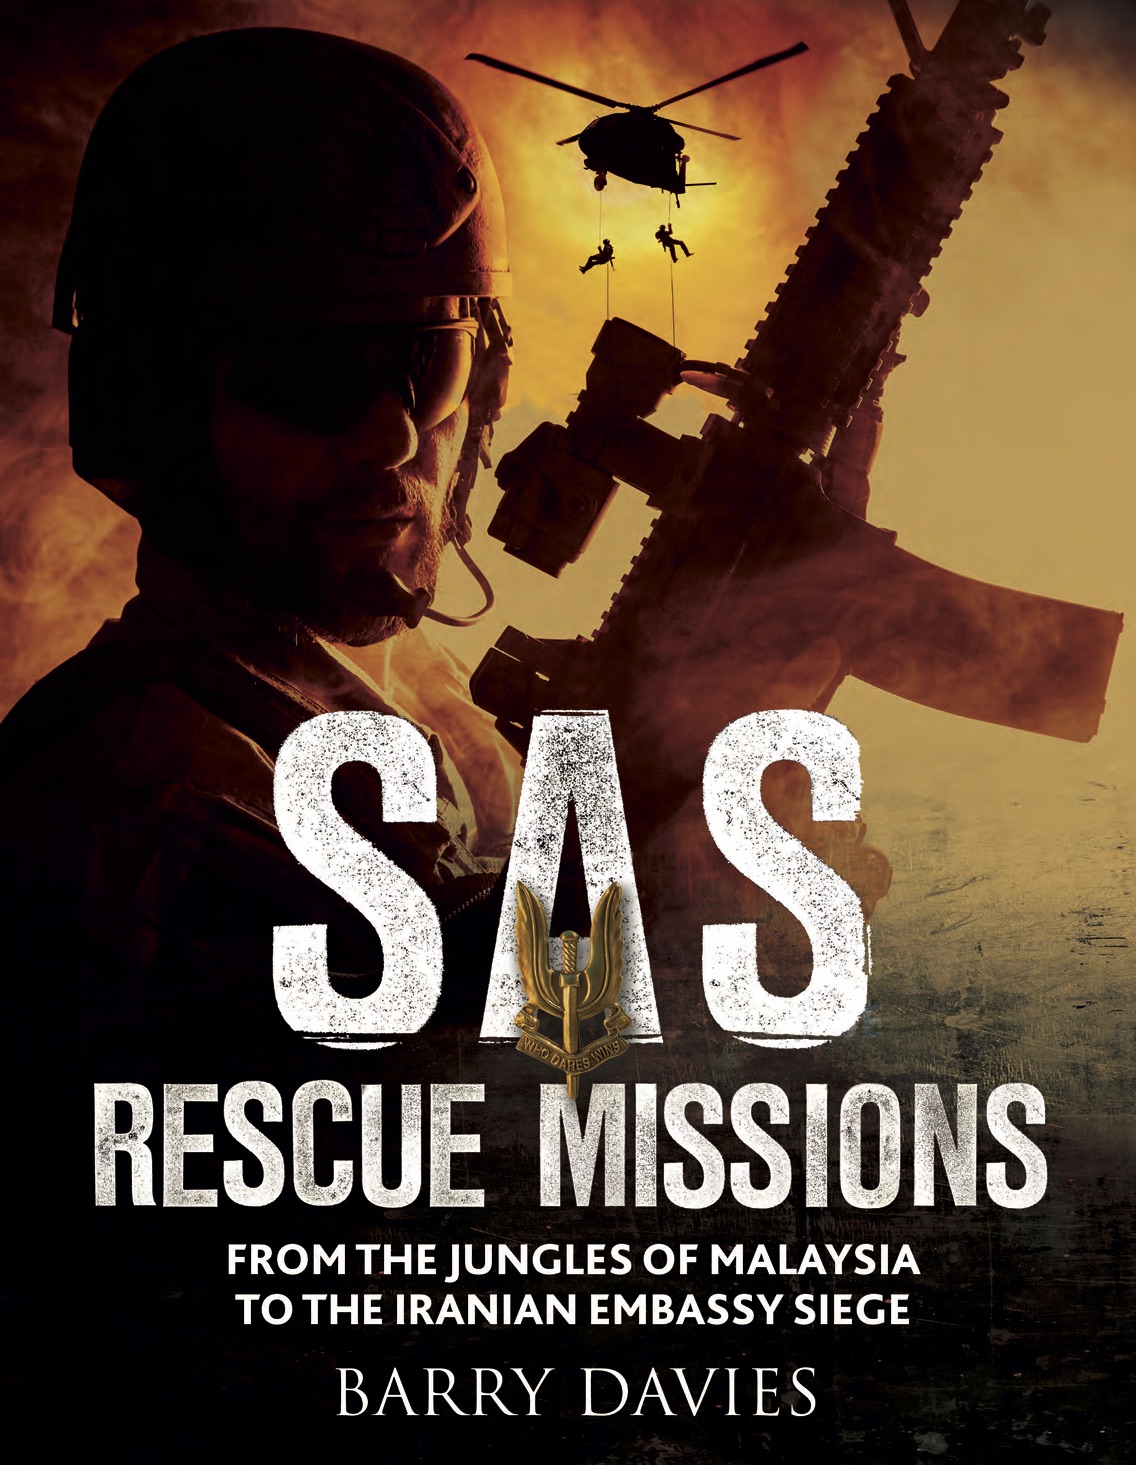 SAS Rescue Missions